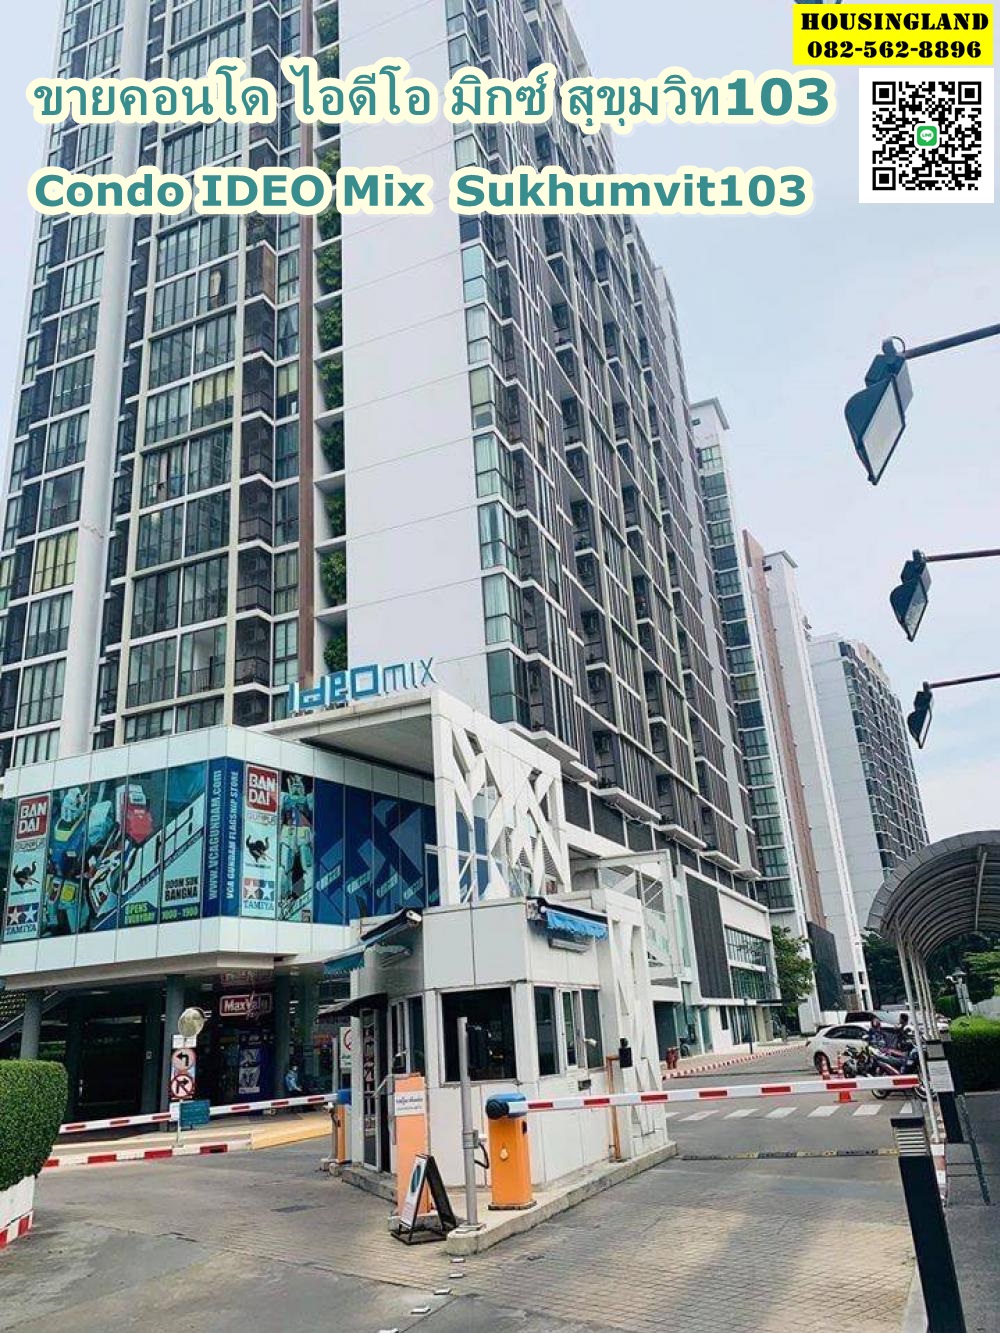 Condo for sale, Ideo Mix Sukhumvit 103, IDEO Mix Sukhumvit103, near BTS Udomsuk station.